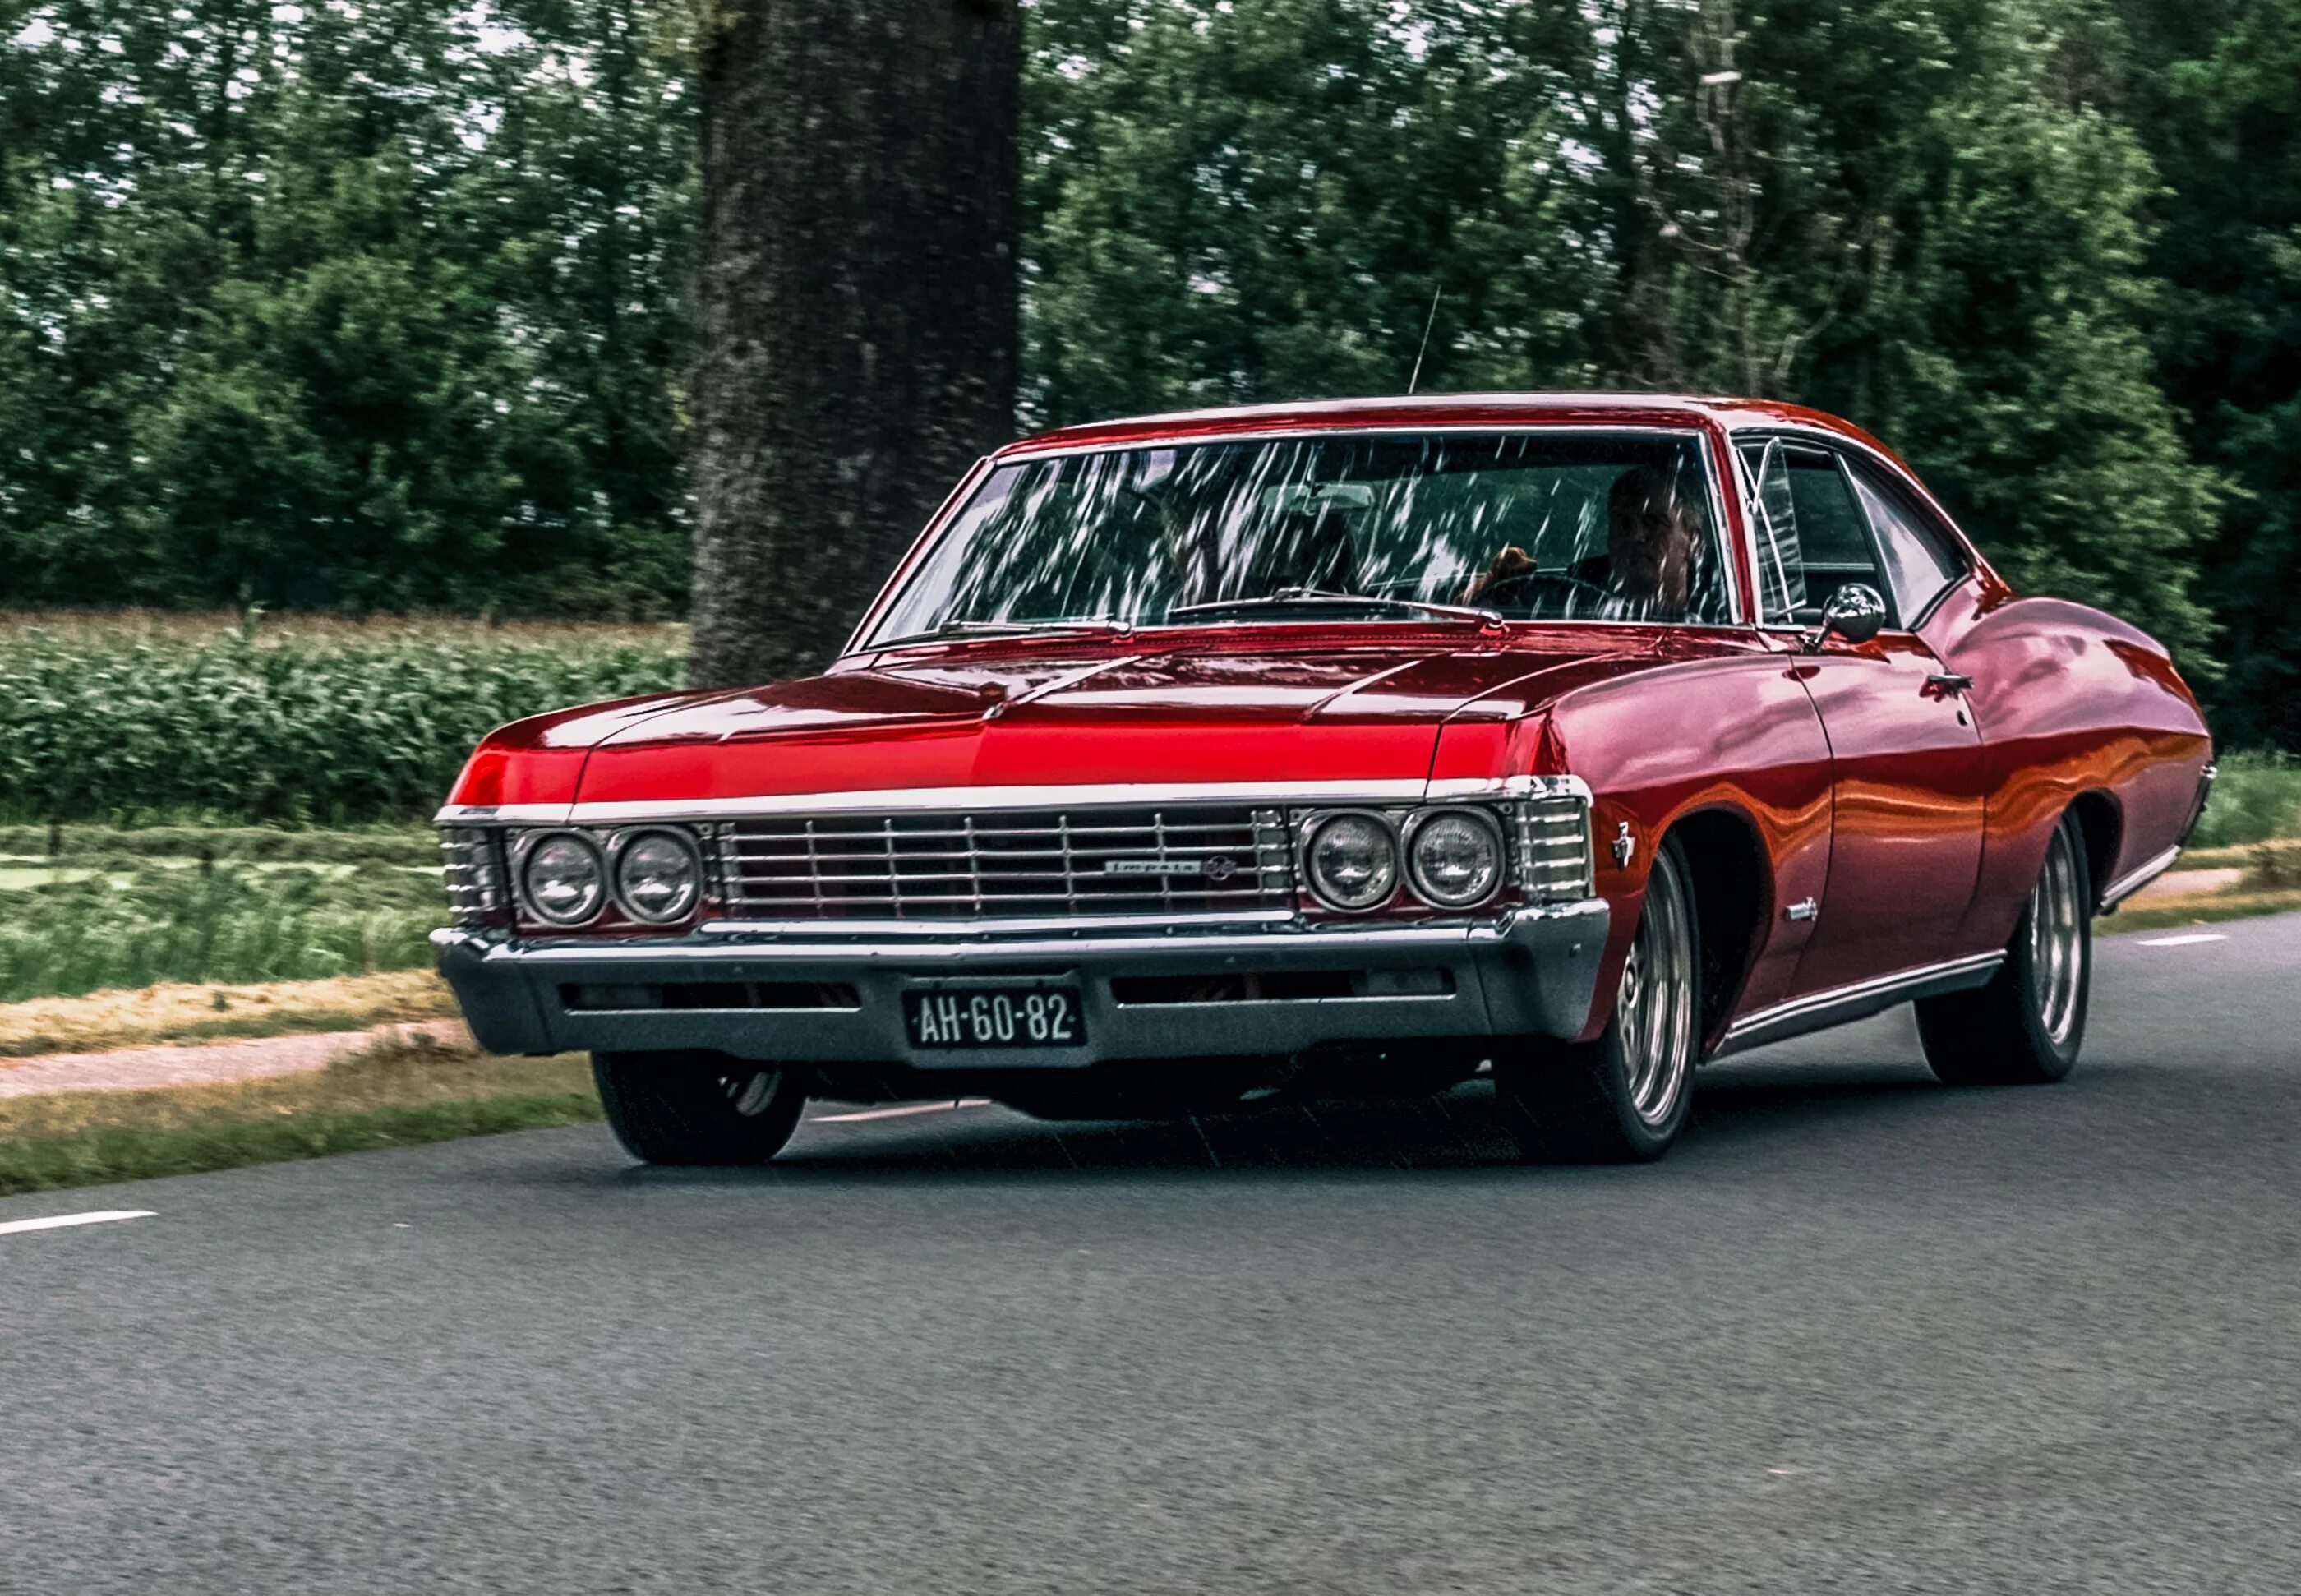 Шевроле Импала 1967. Chevrolet Impala SS 1967. Шевроле Импала 67. Импала 67 СС.